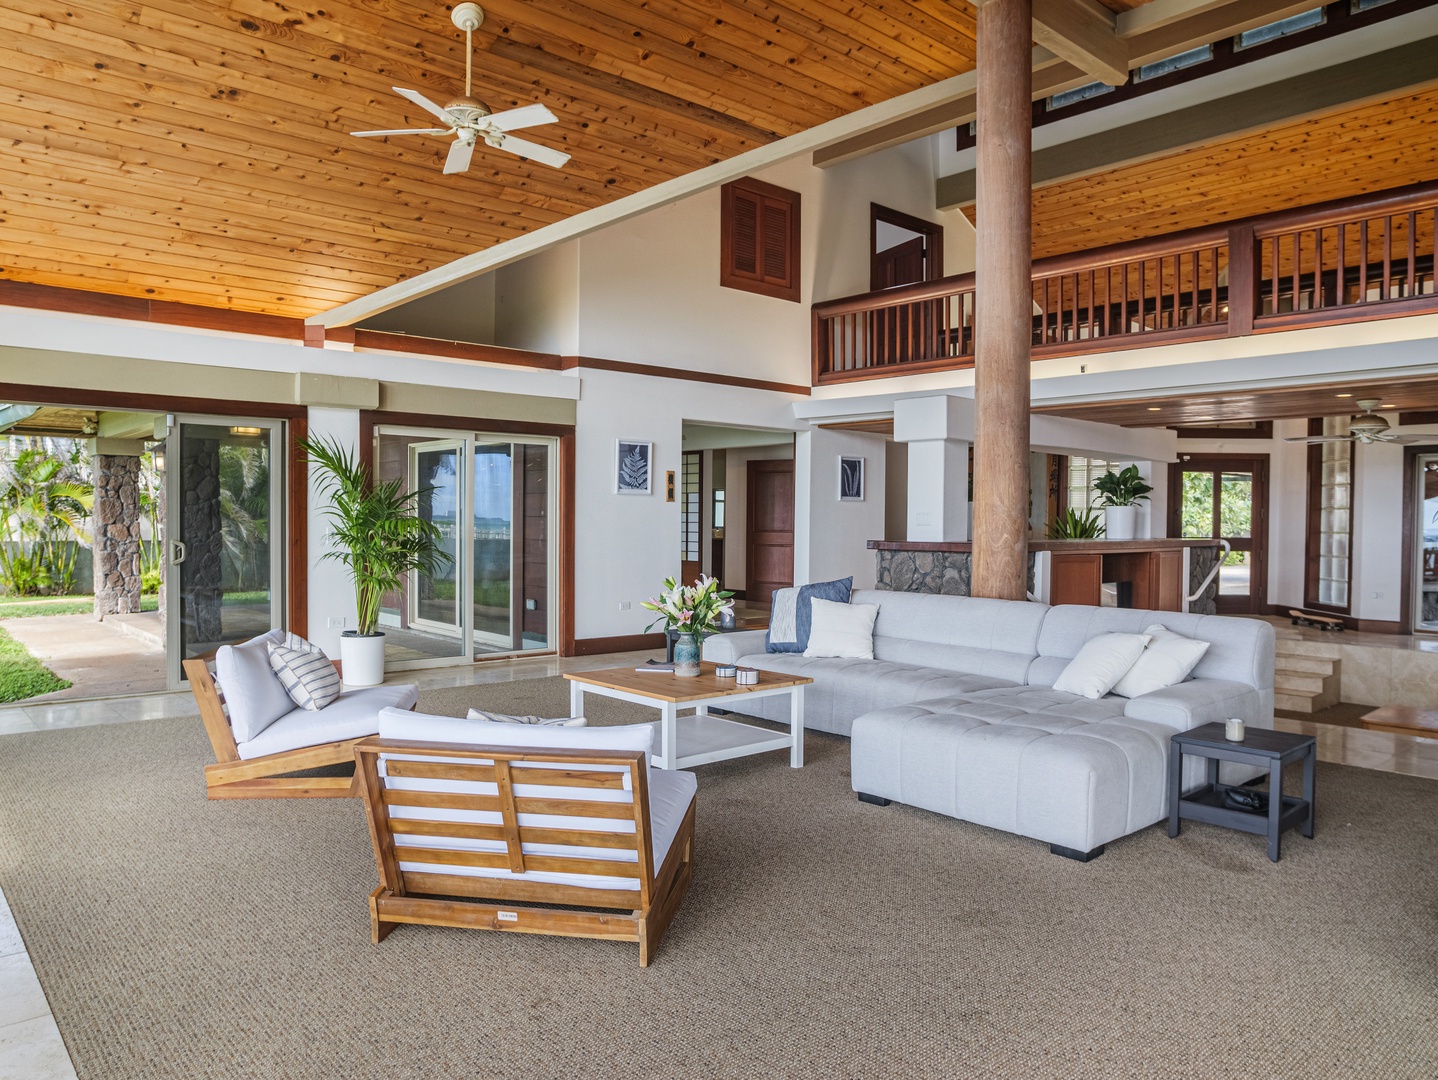 Waianae Vacation Rentals, Konishiki Beachhouse - Large living area with modern furniture creates the perfect conversation spot.